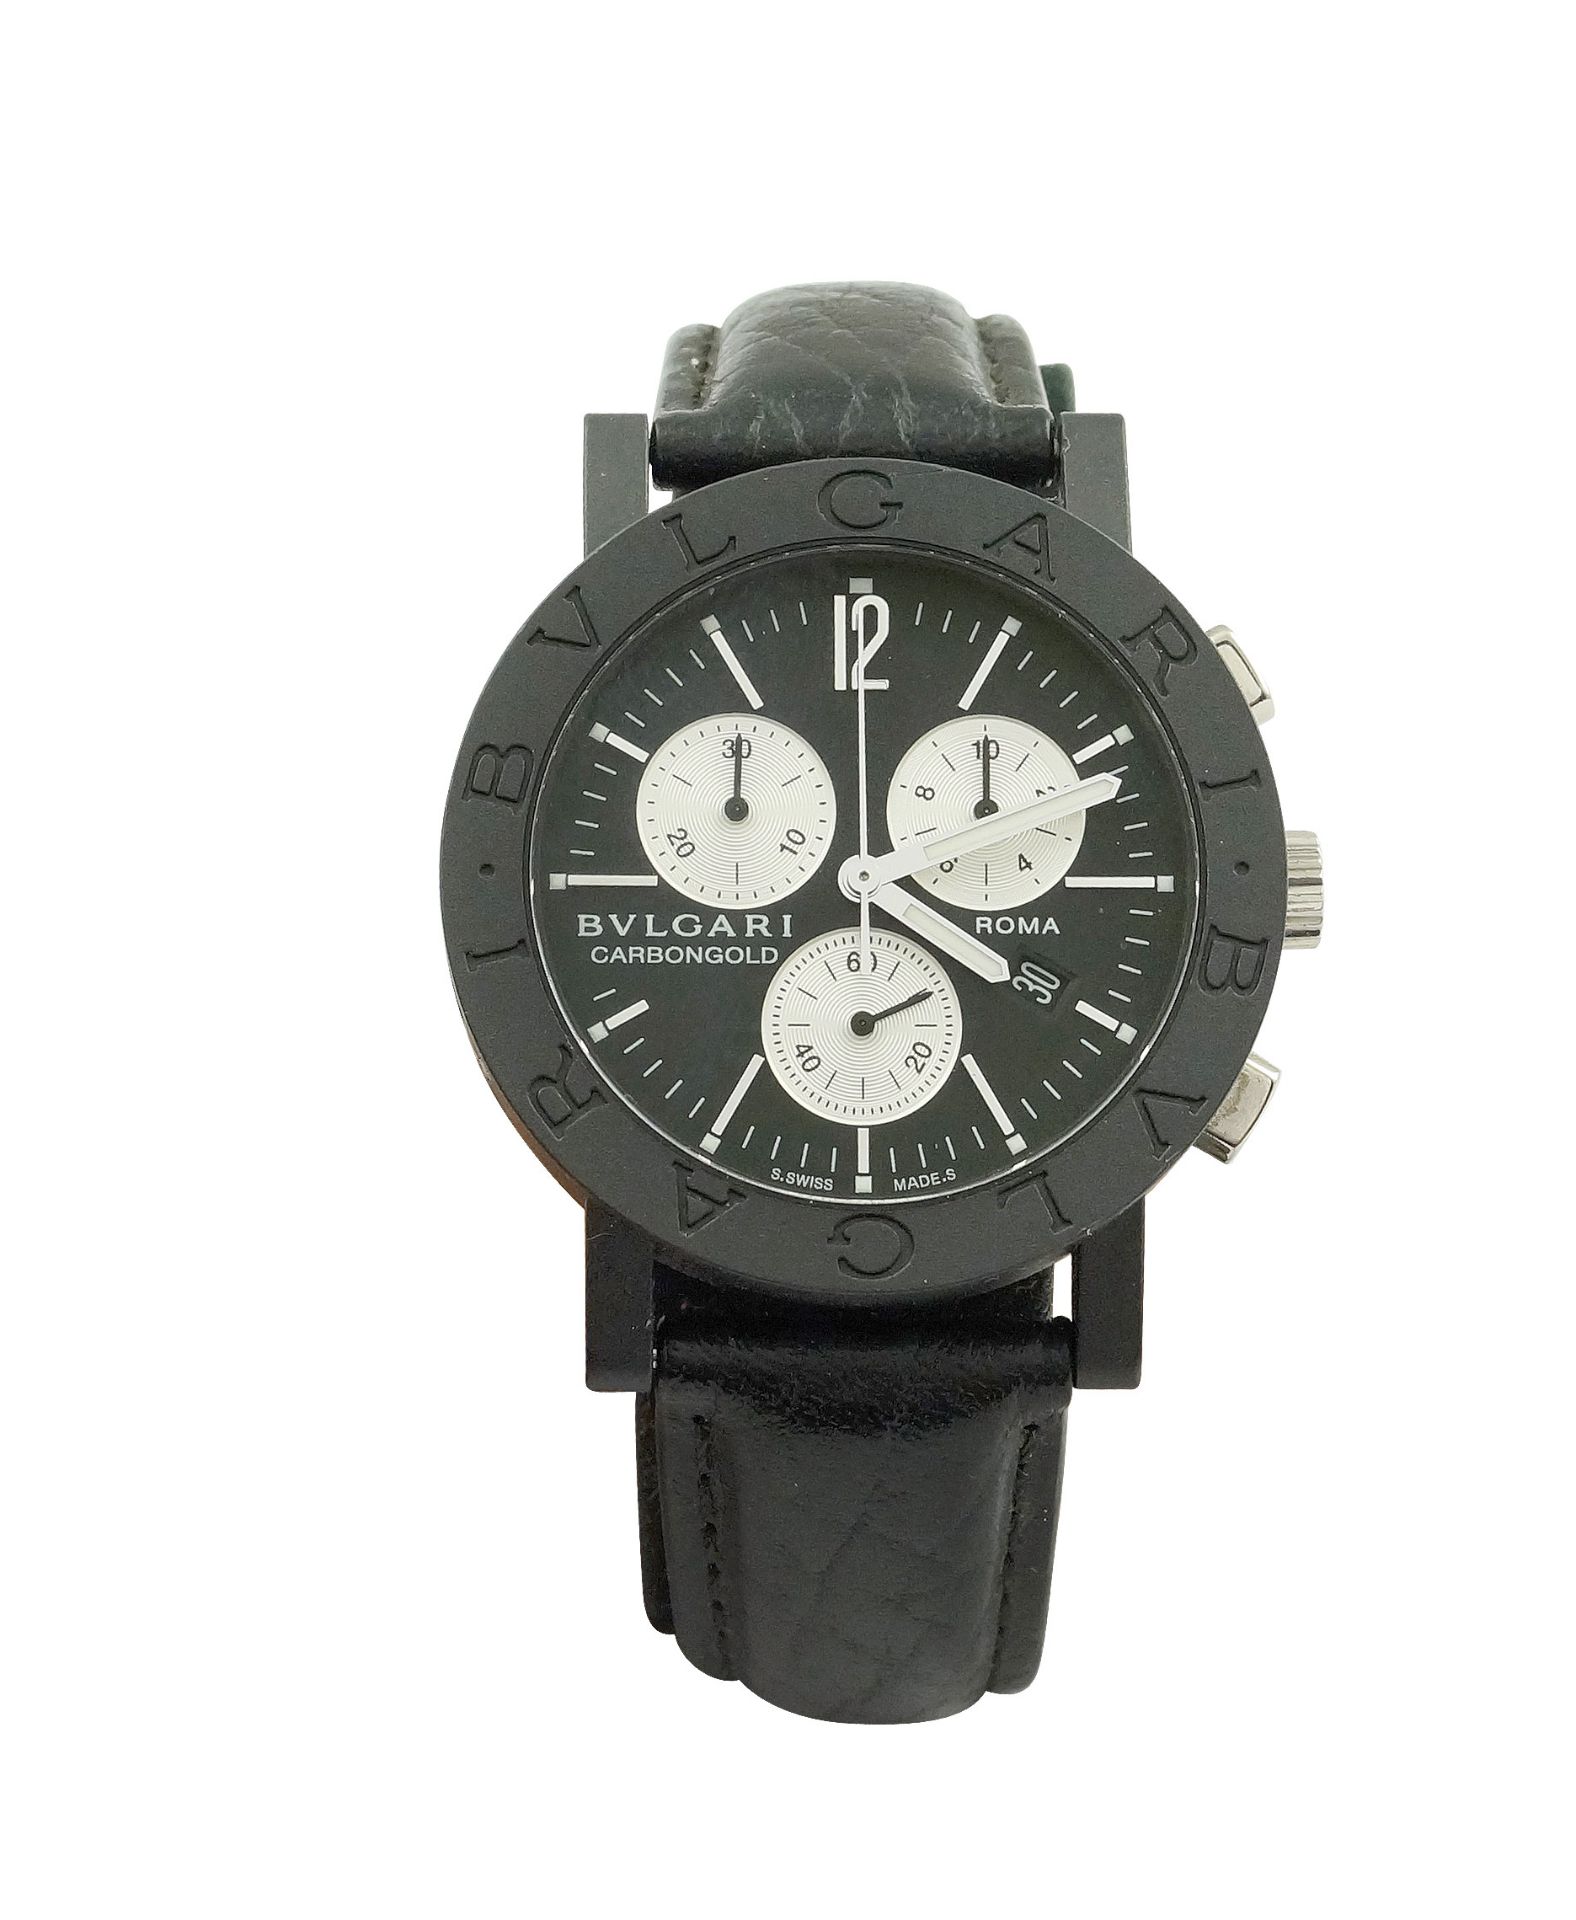 A Bulgari Carbongold chronograph wrist watch